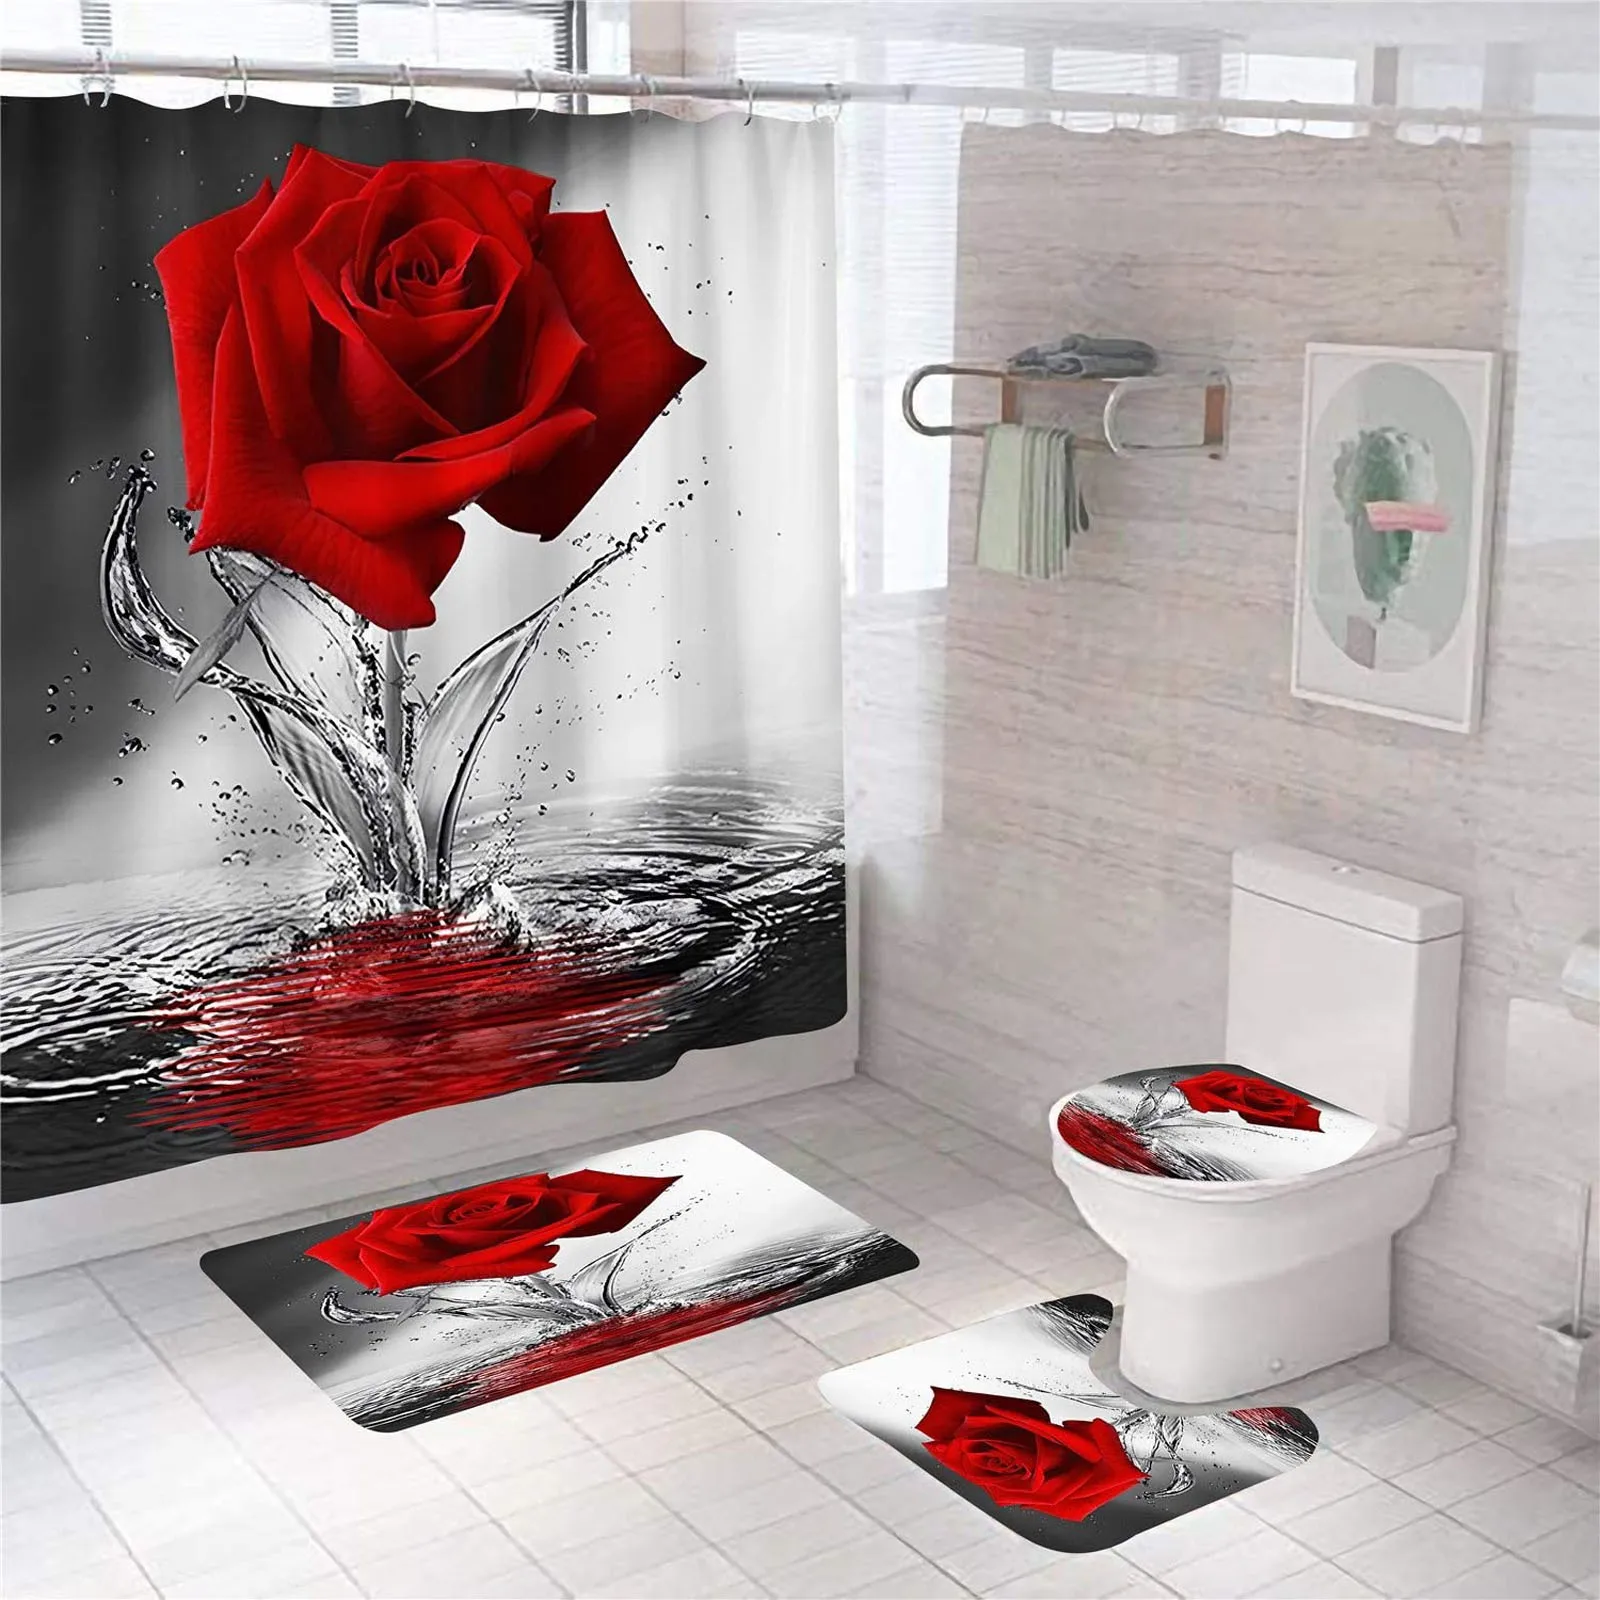 Details about   Romantic Rose Heart Bathroom Waterproof Shower Curtain Toilet Lid Cover Bath Mat 